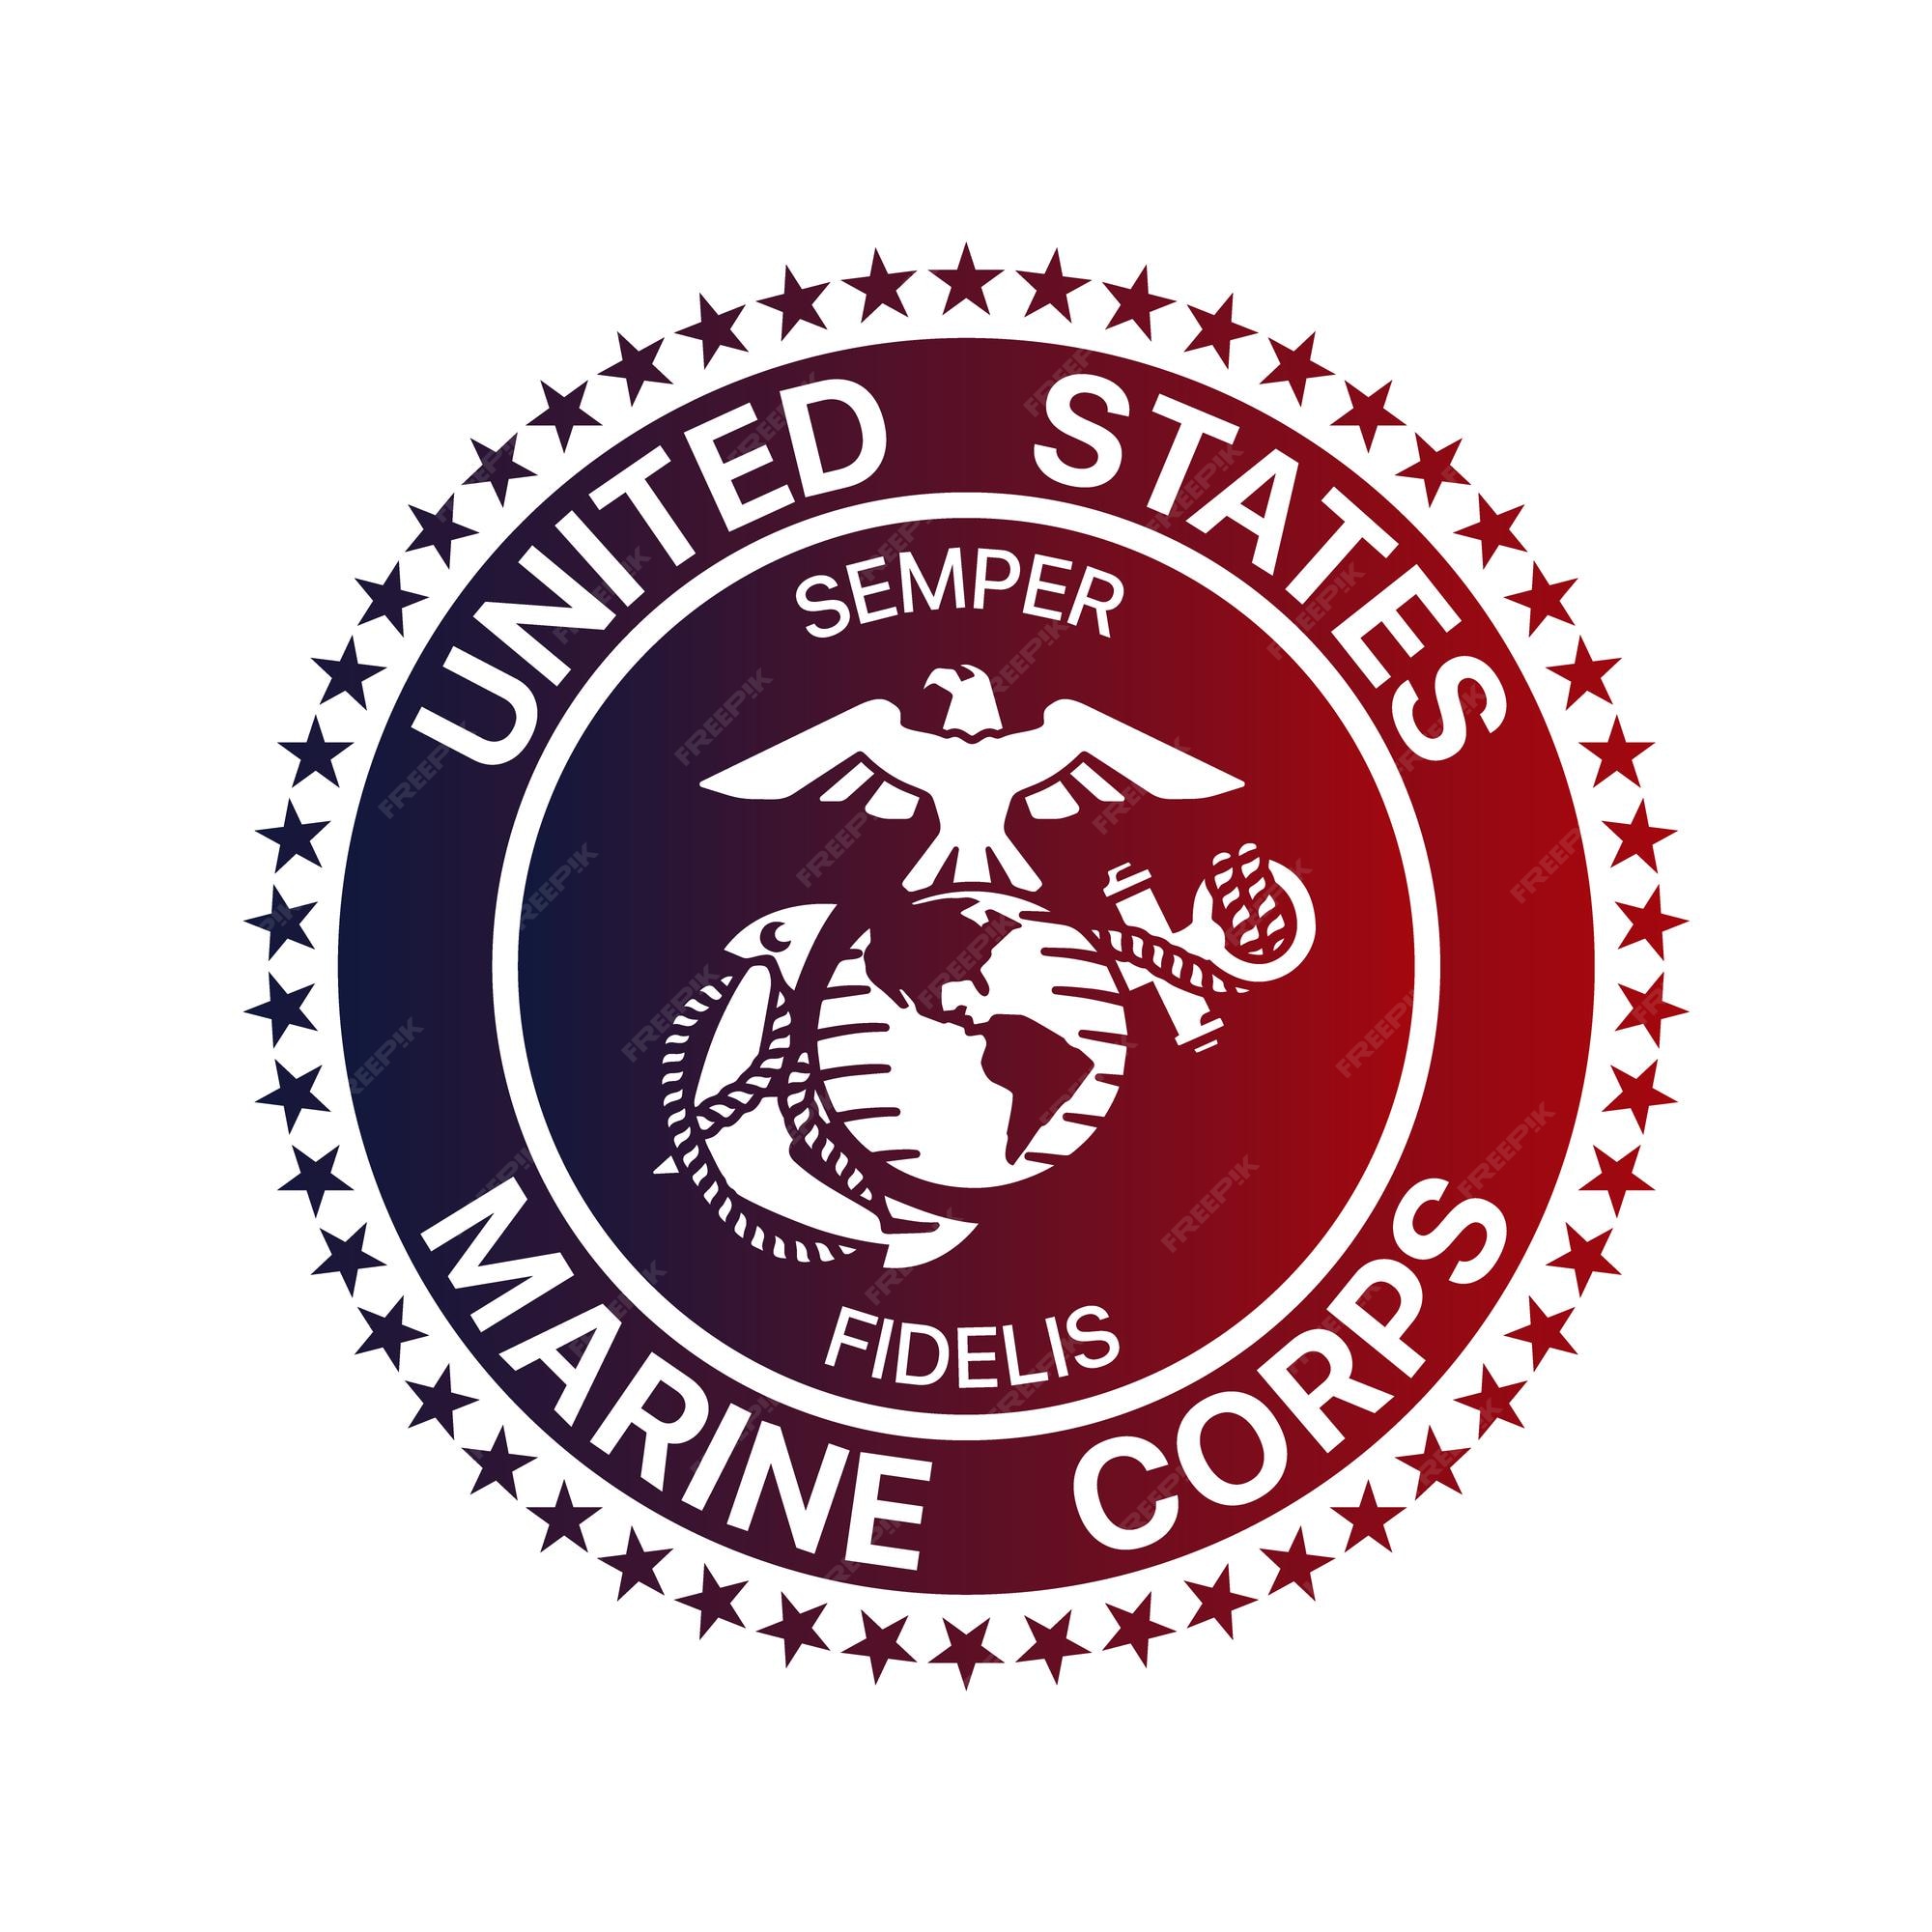 Premium Vector | Vector logo of the united states marine corps usmc